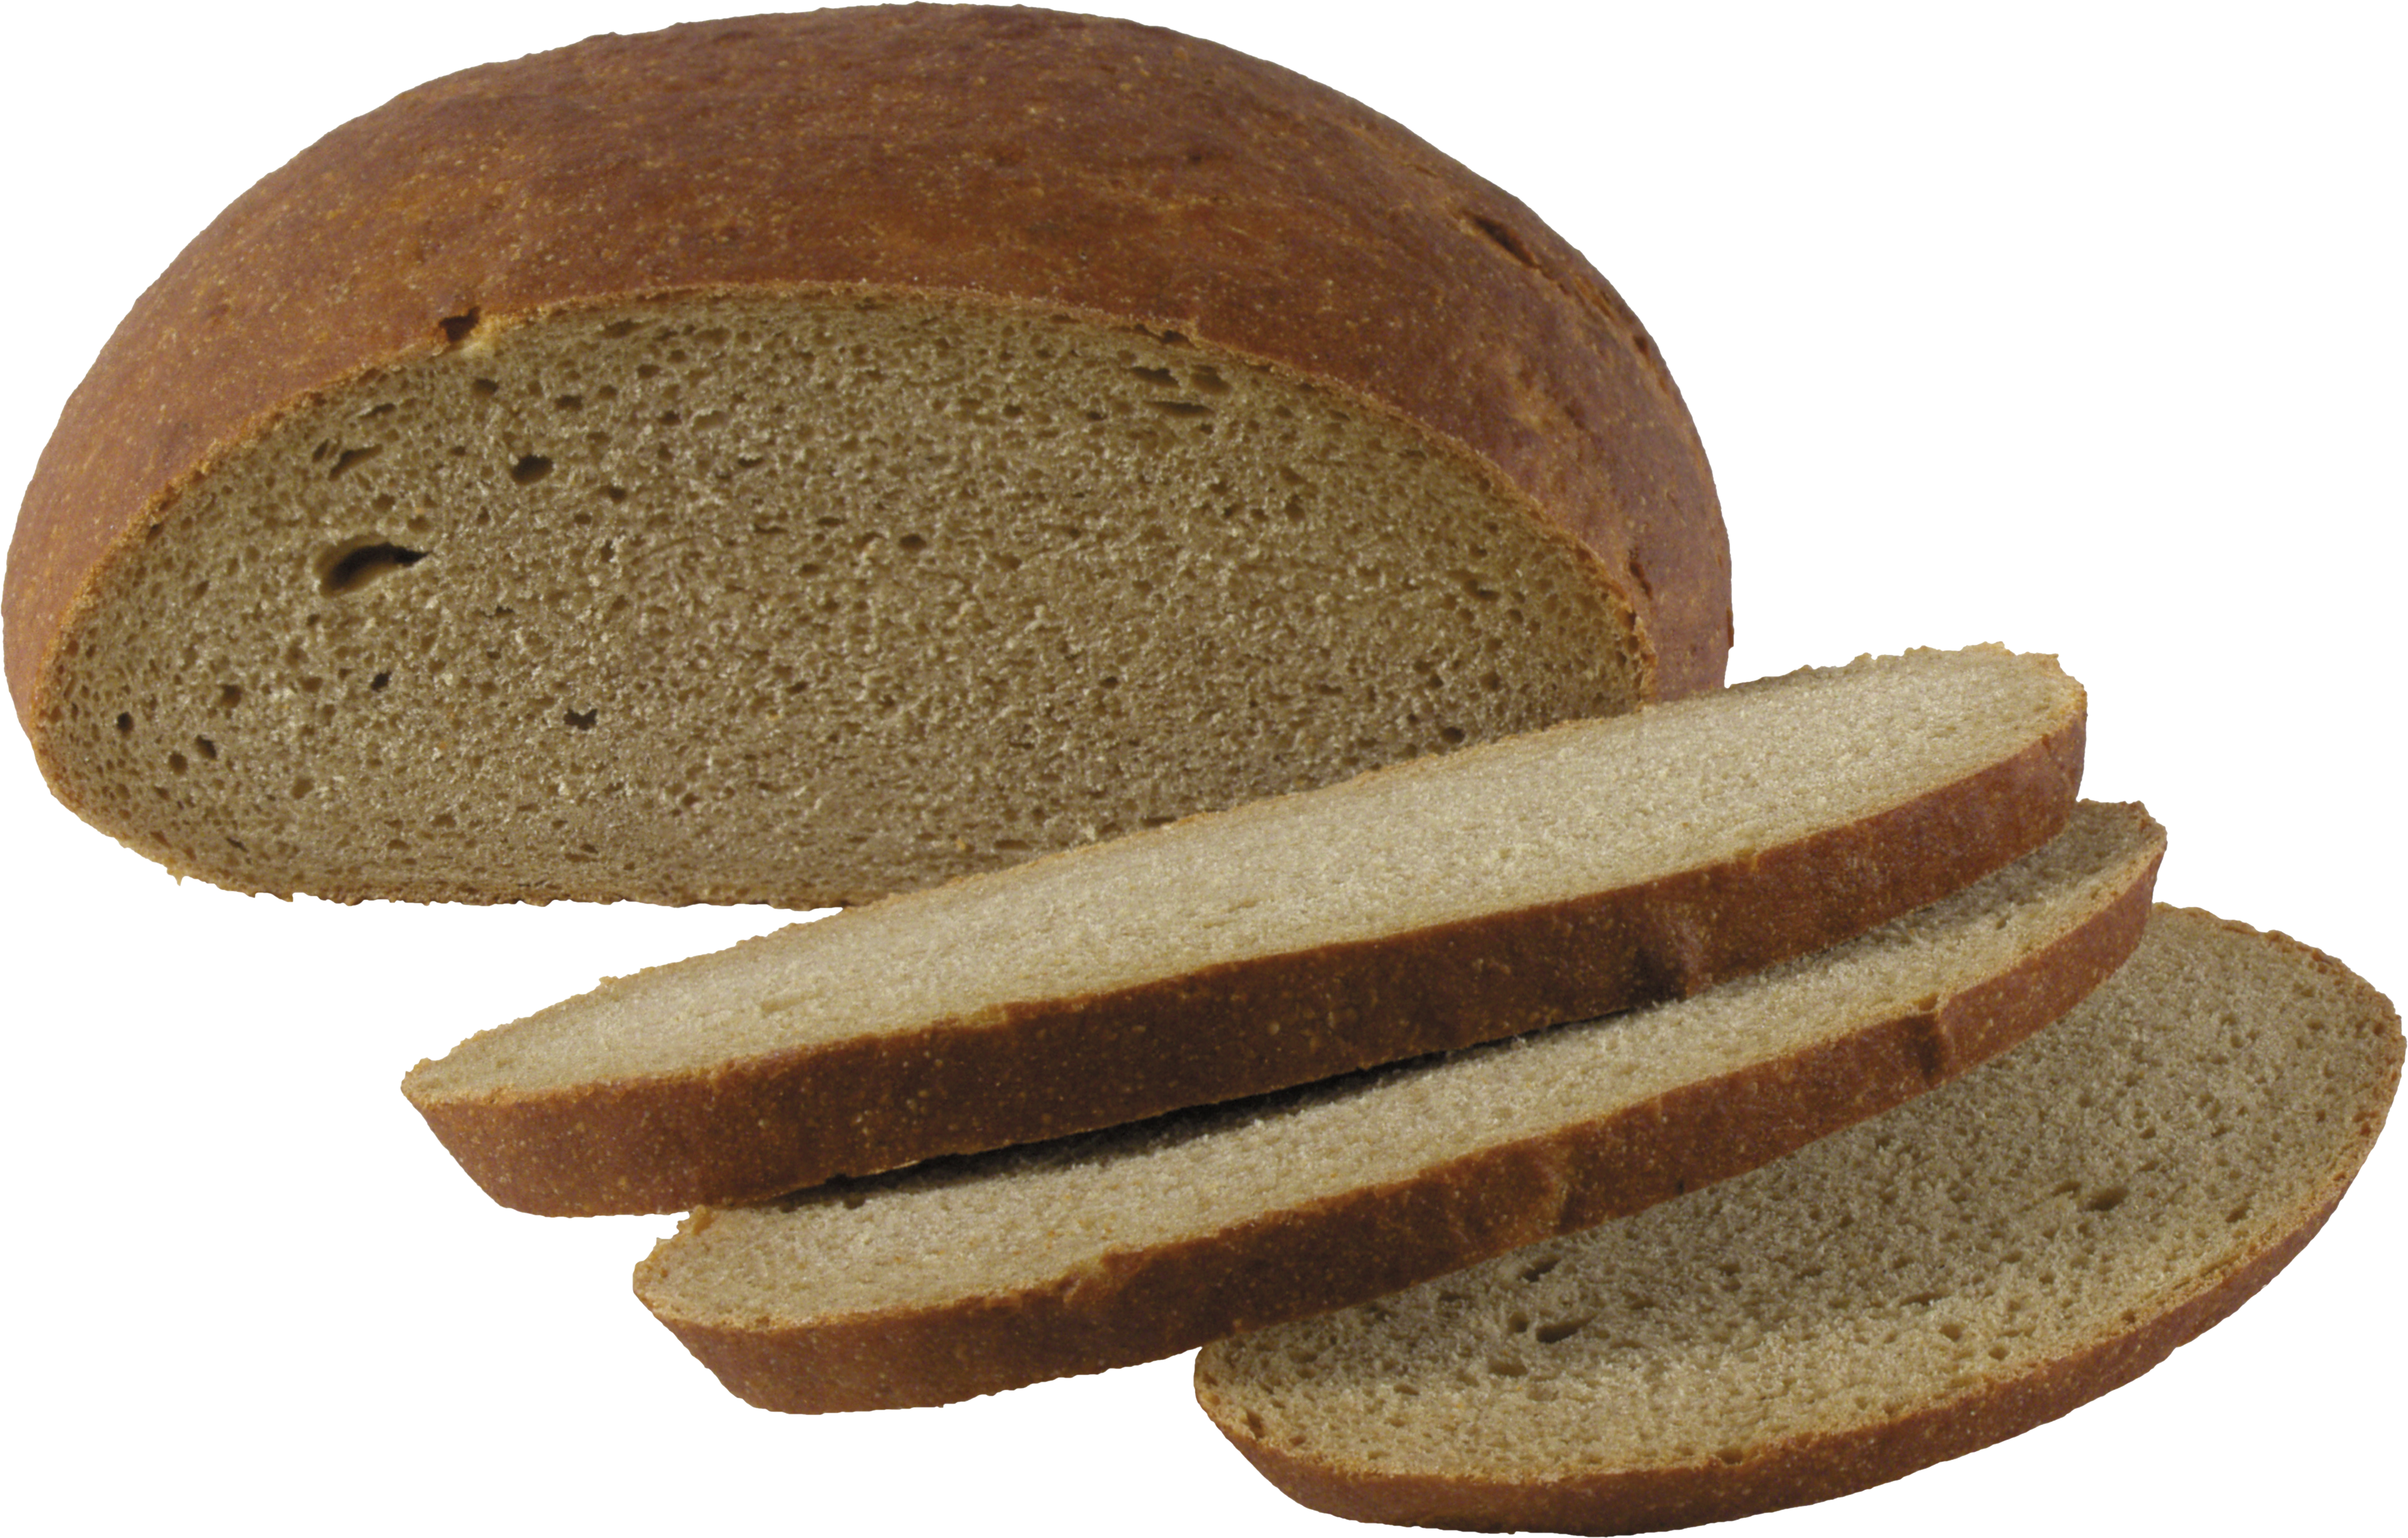 Szary chleb